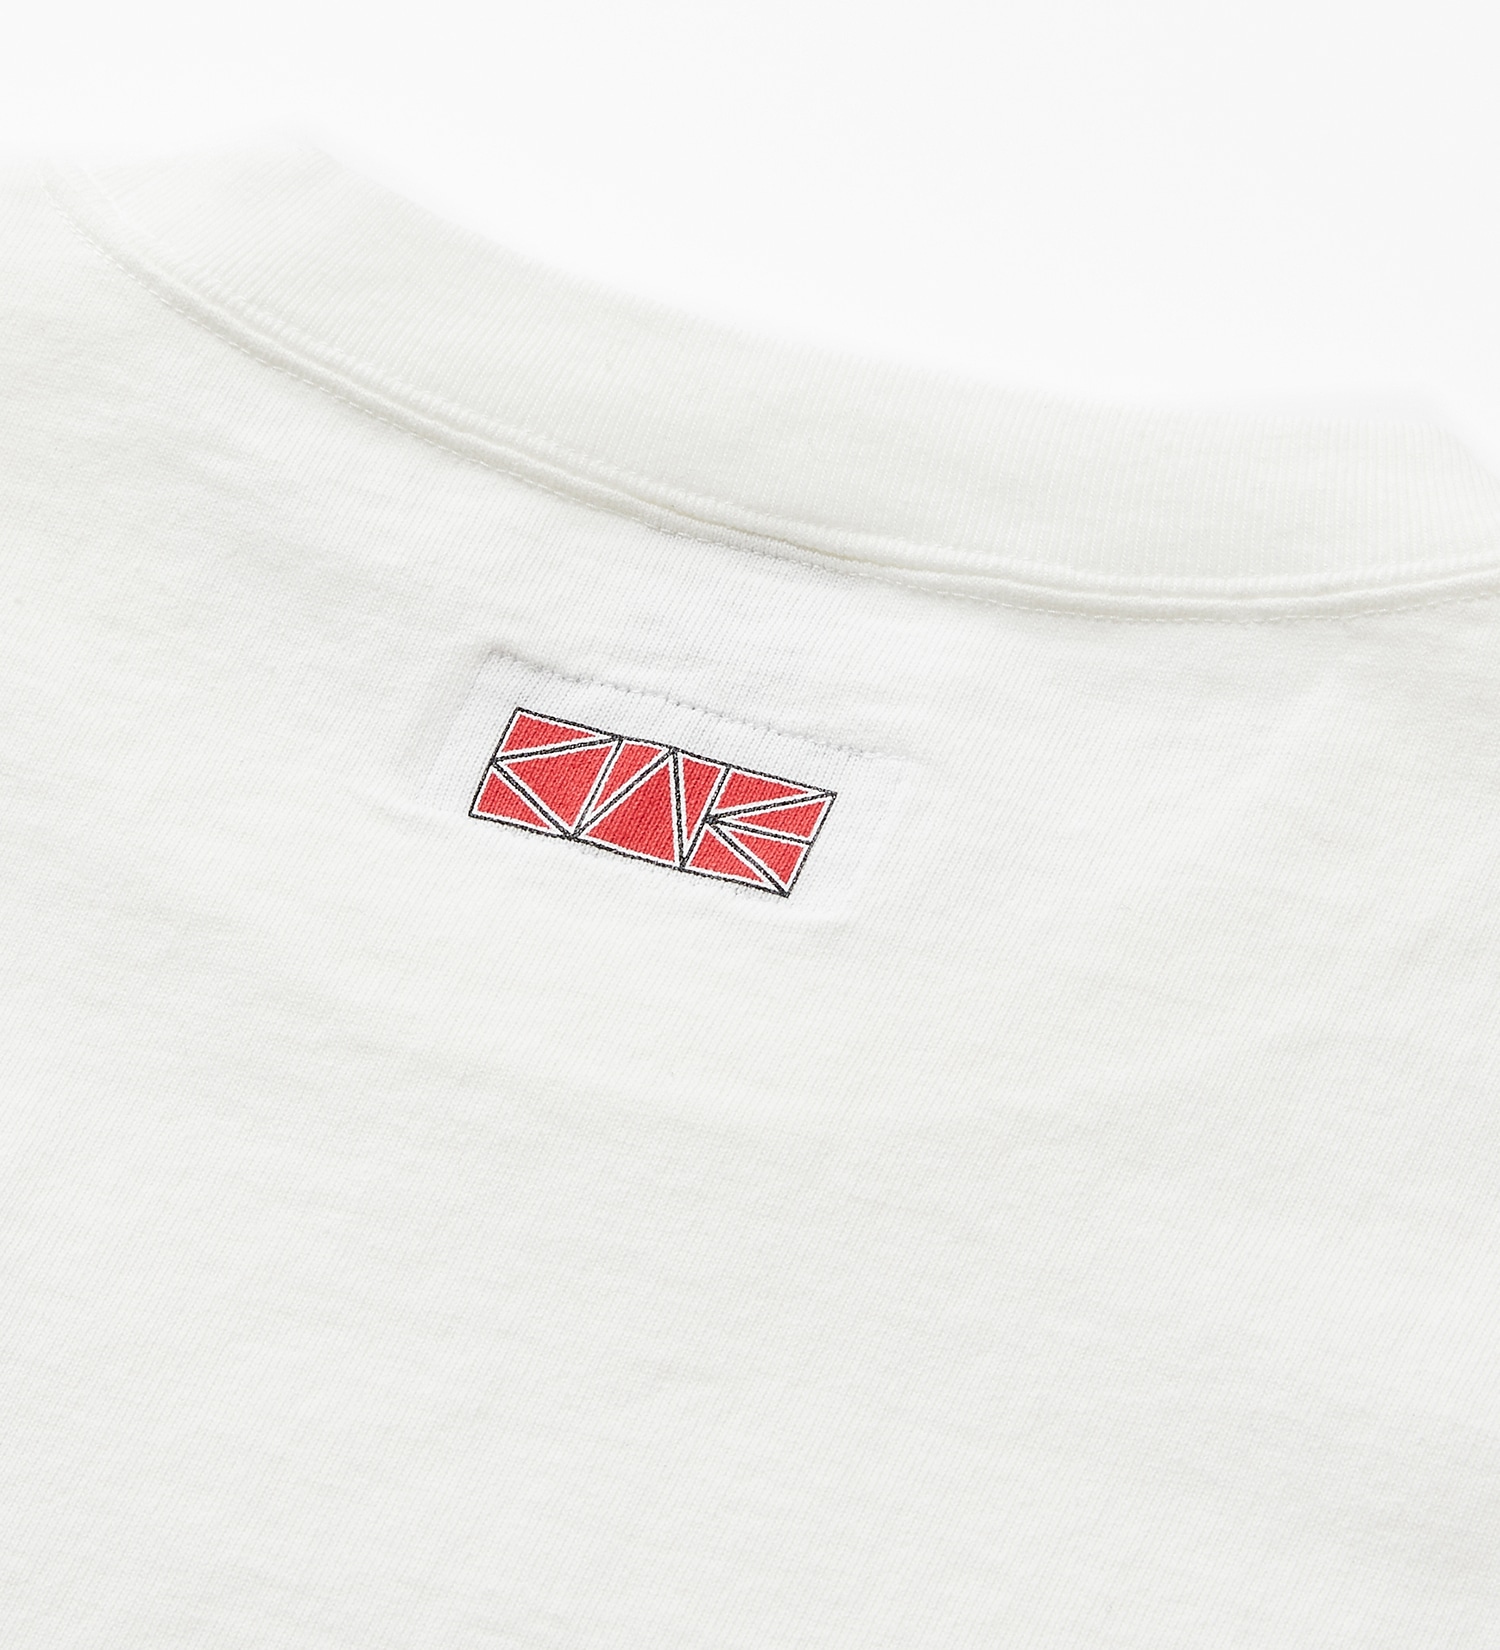 EDWIN(エドウイン)の【SALE】【EDWIN x KIDILL x WINSTON SMITH】KWE Patch Print T-shirts II|トップス/Tシャツ/カットソー/メンズ|ホワイト